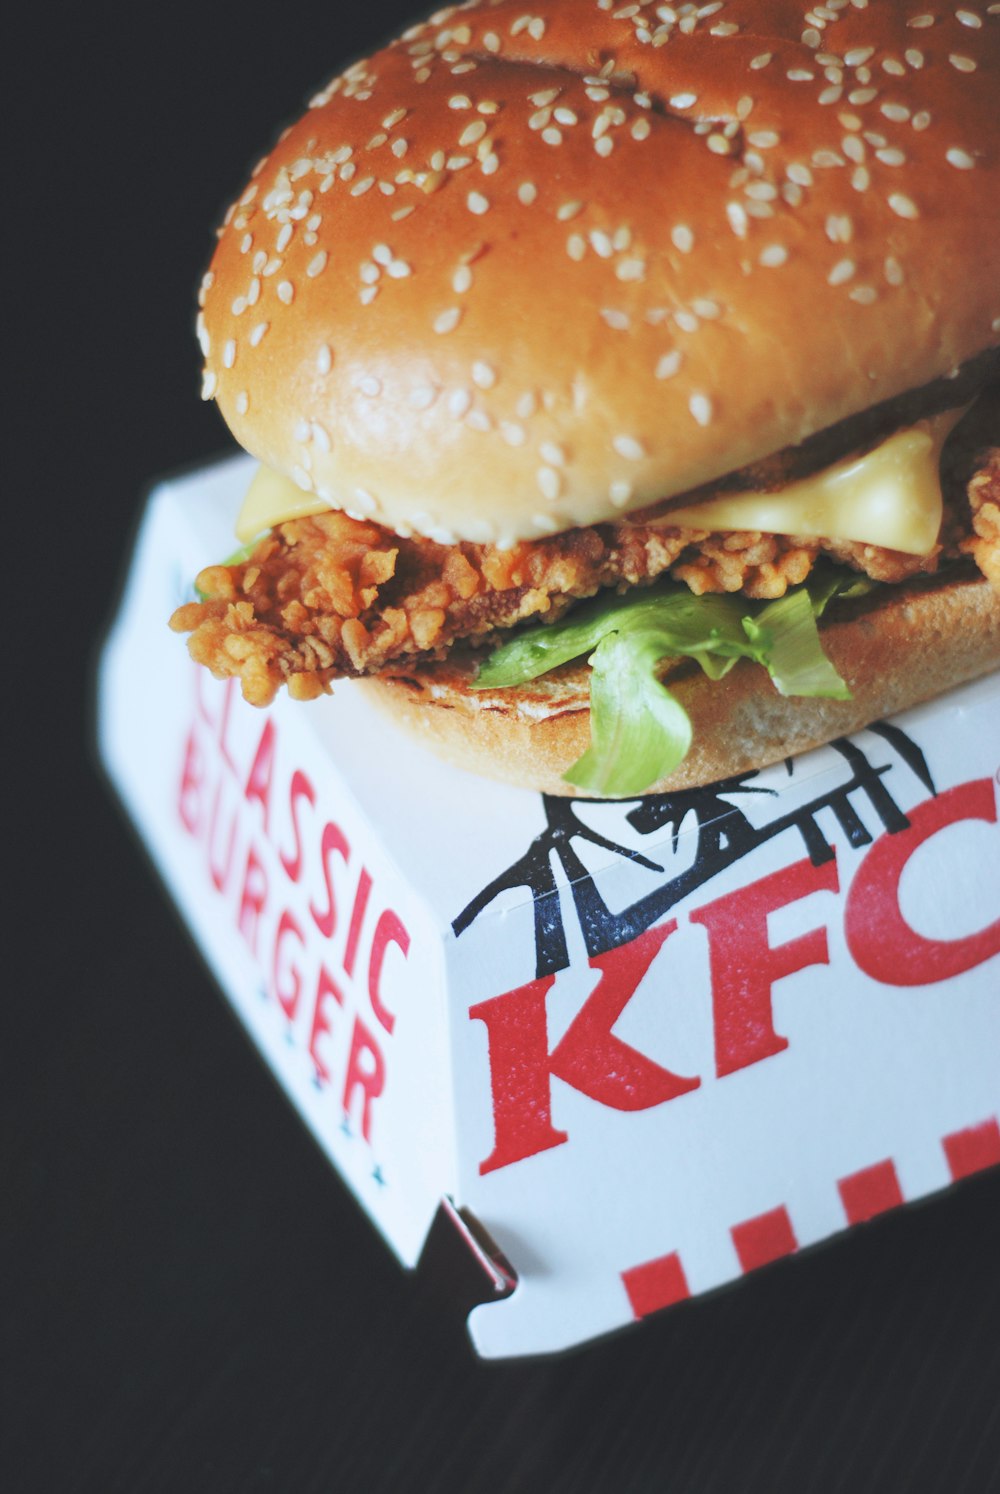 KFC hamburger and box